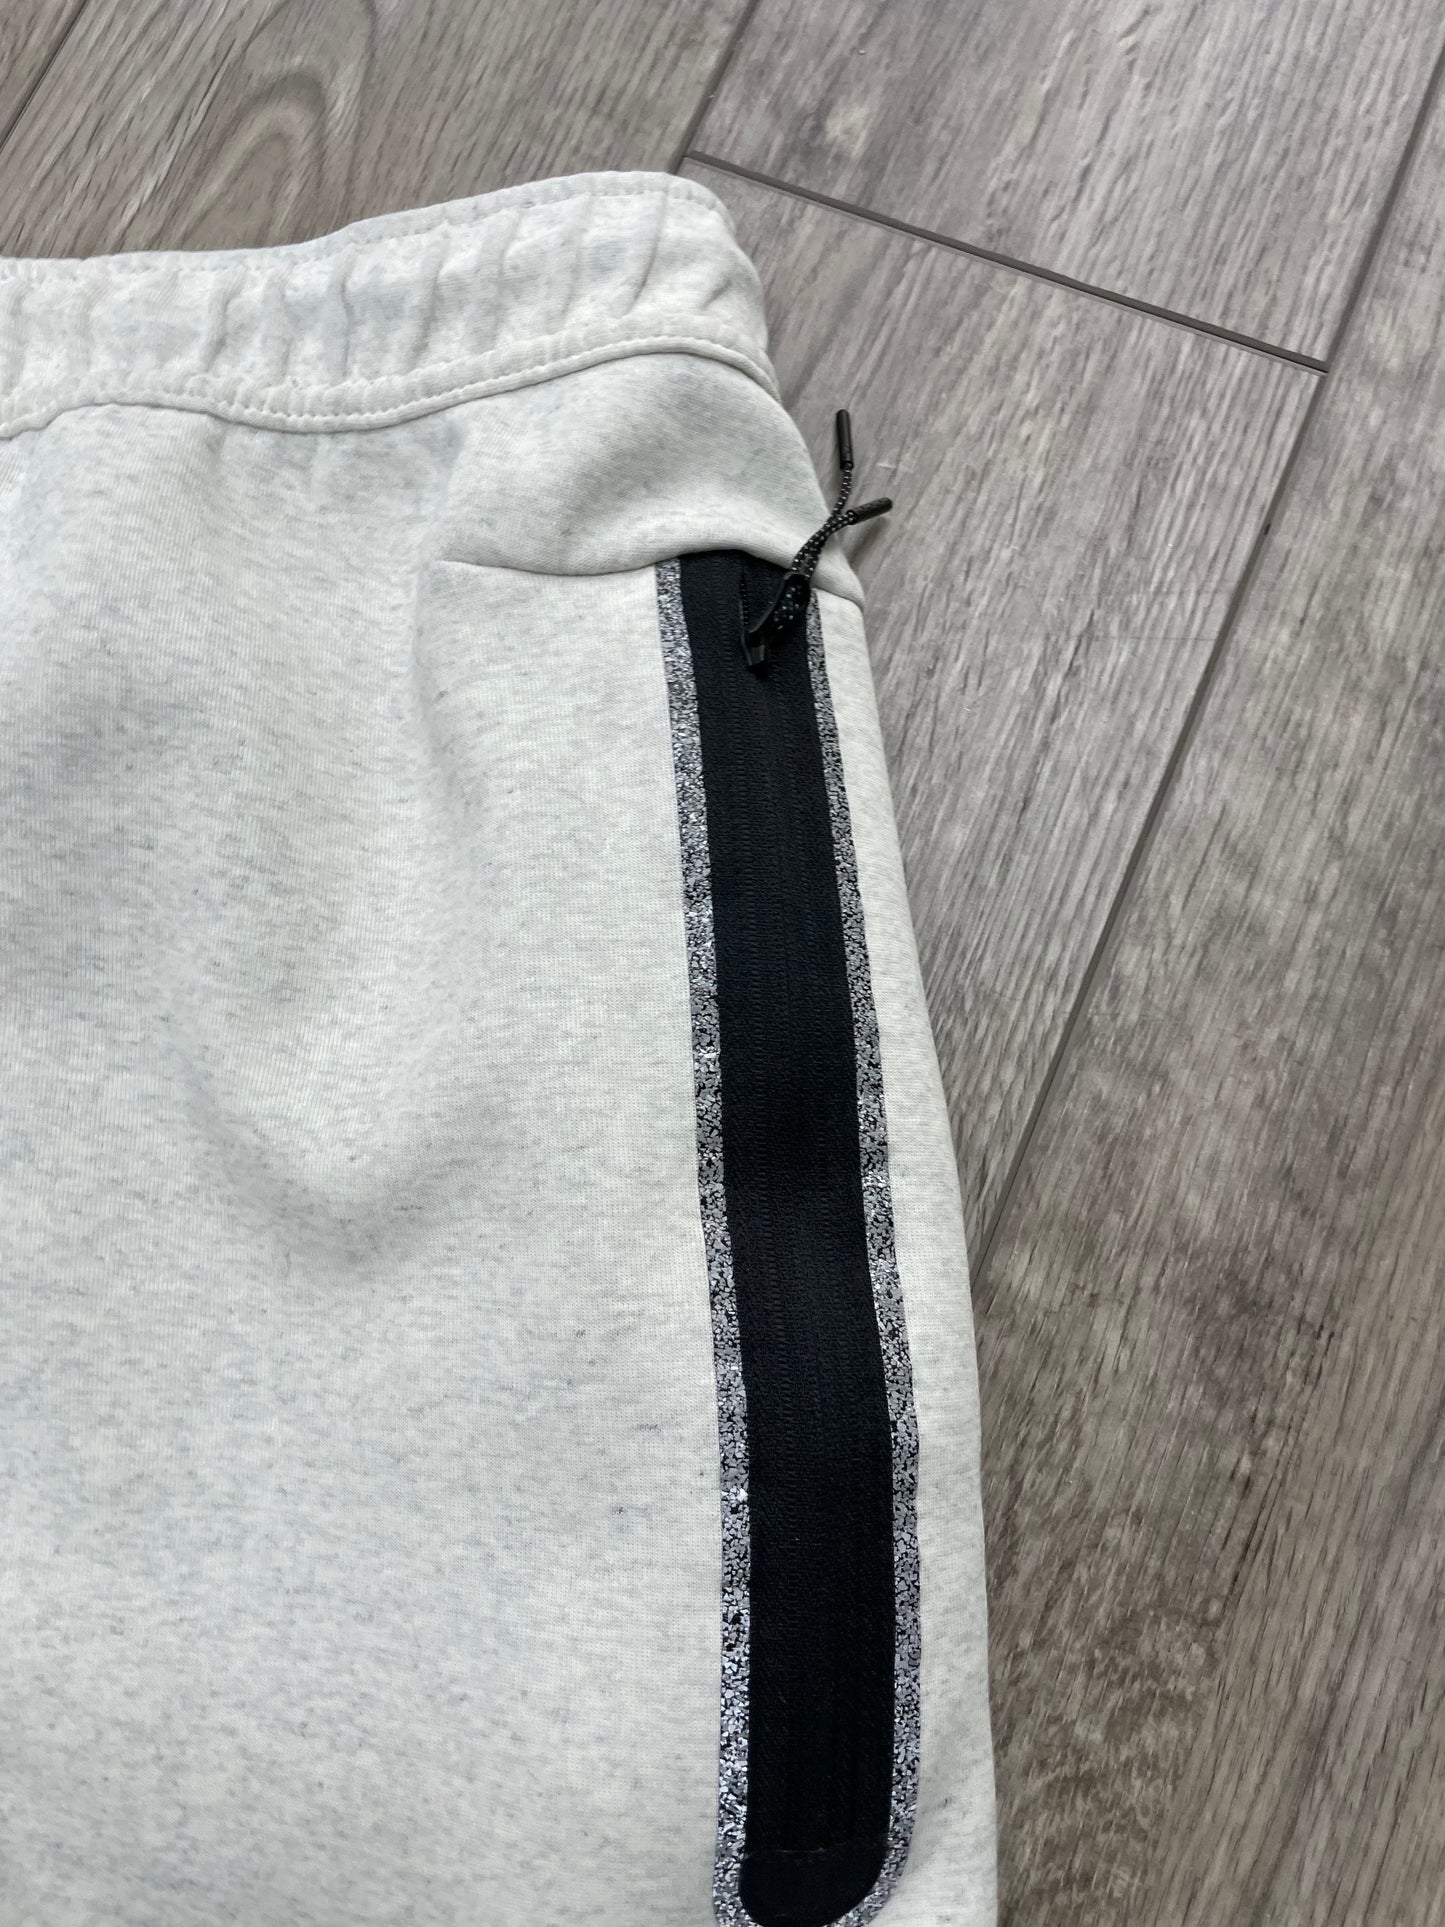 Nike Grey Jogger Sweatpants